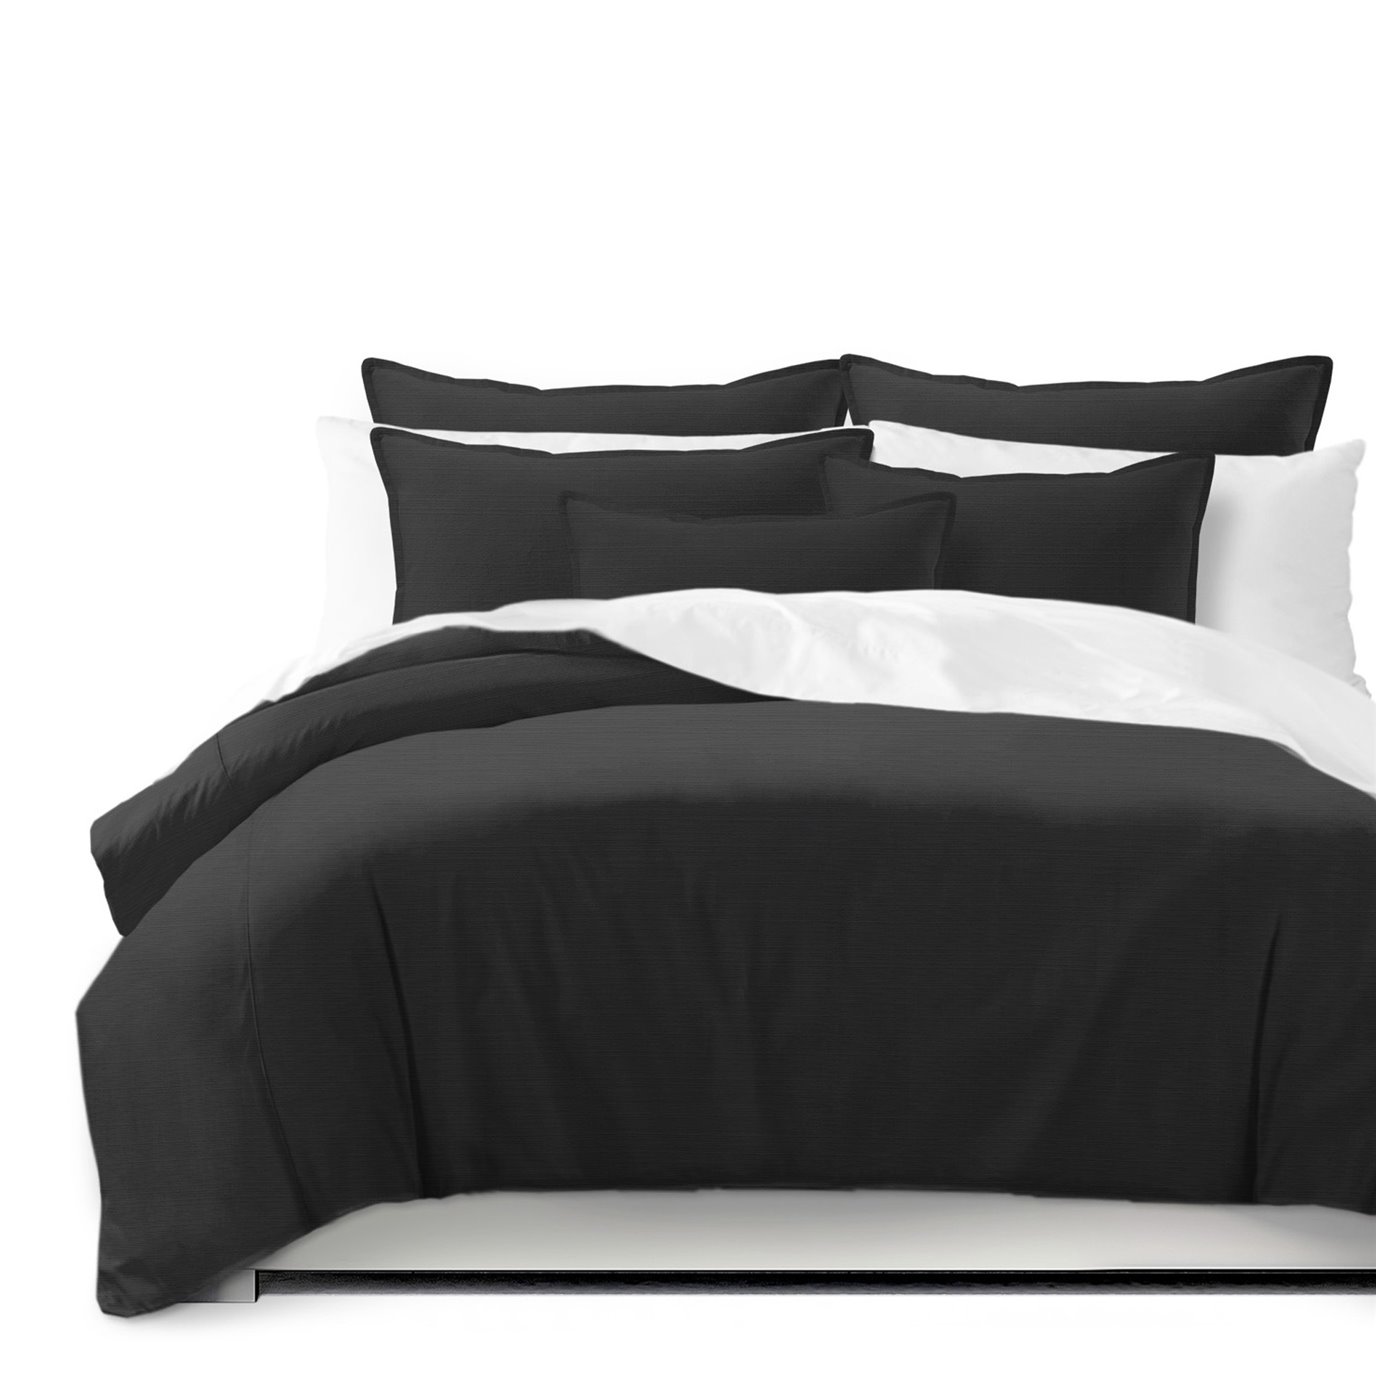 Nova Black Duvet Cover and Pillow Sham(s) Set - Size Queen